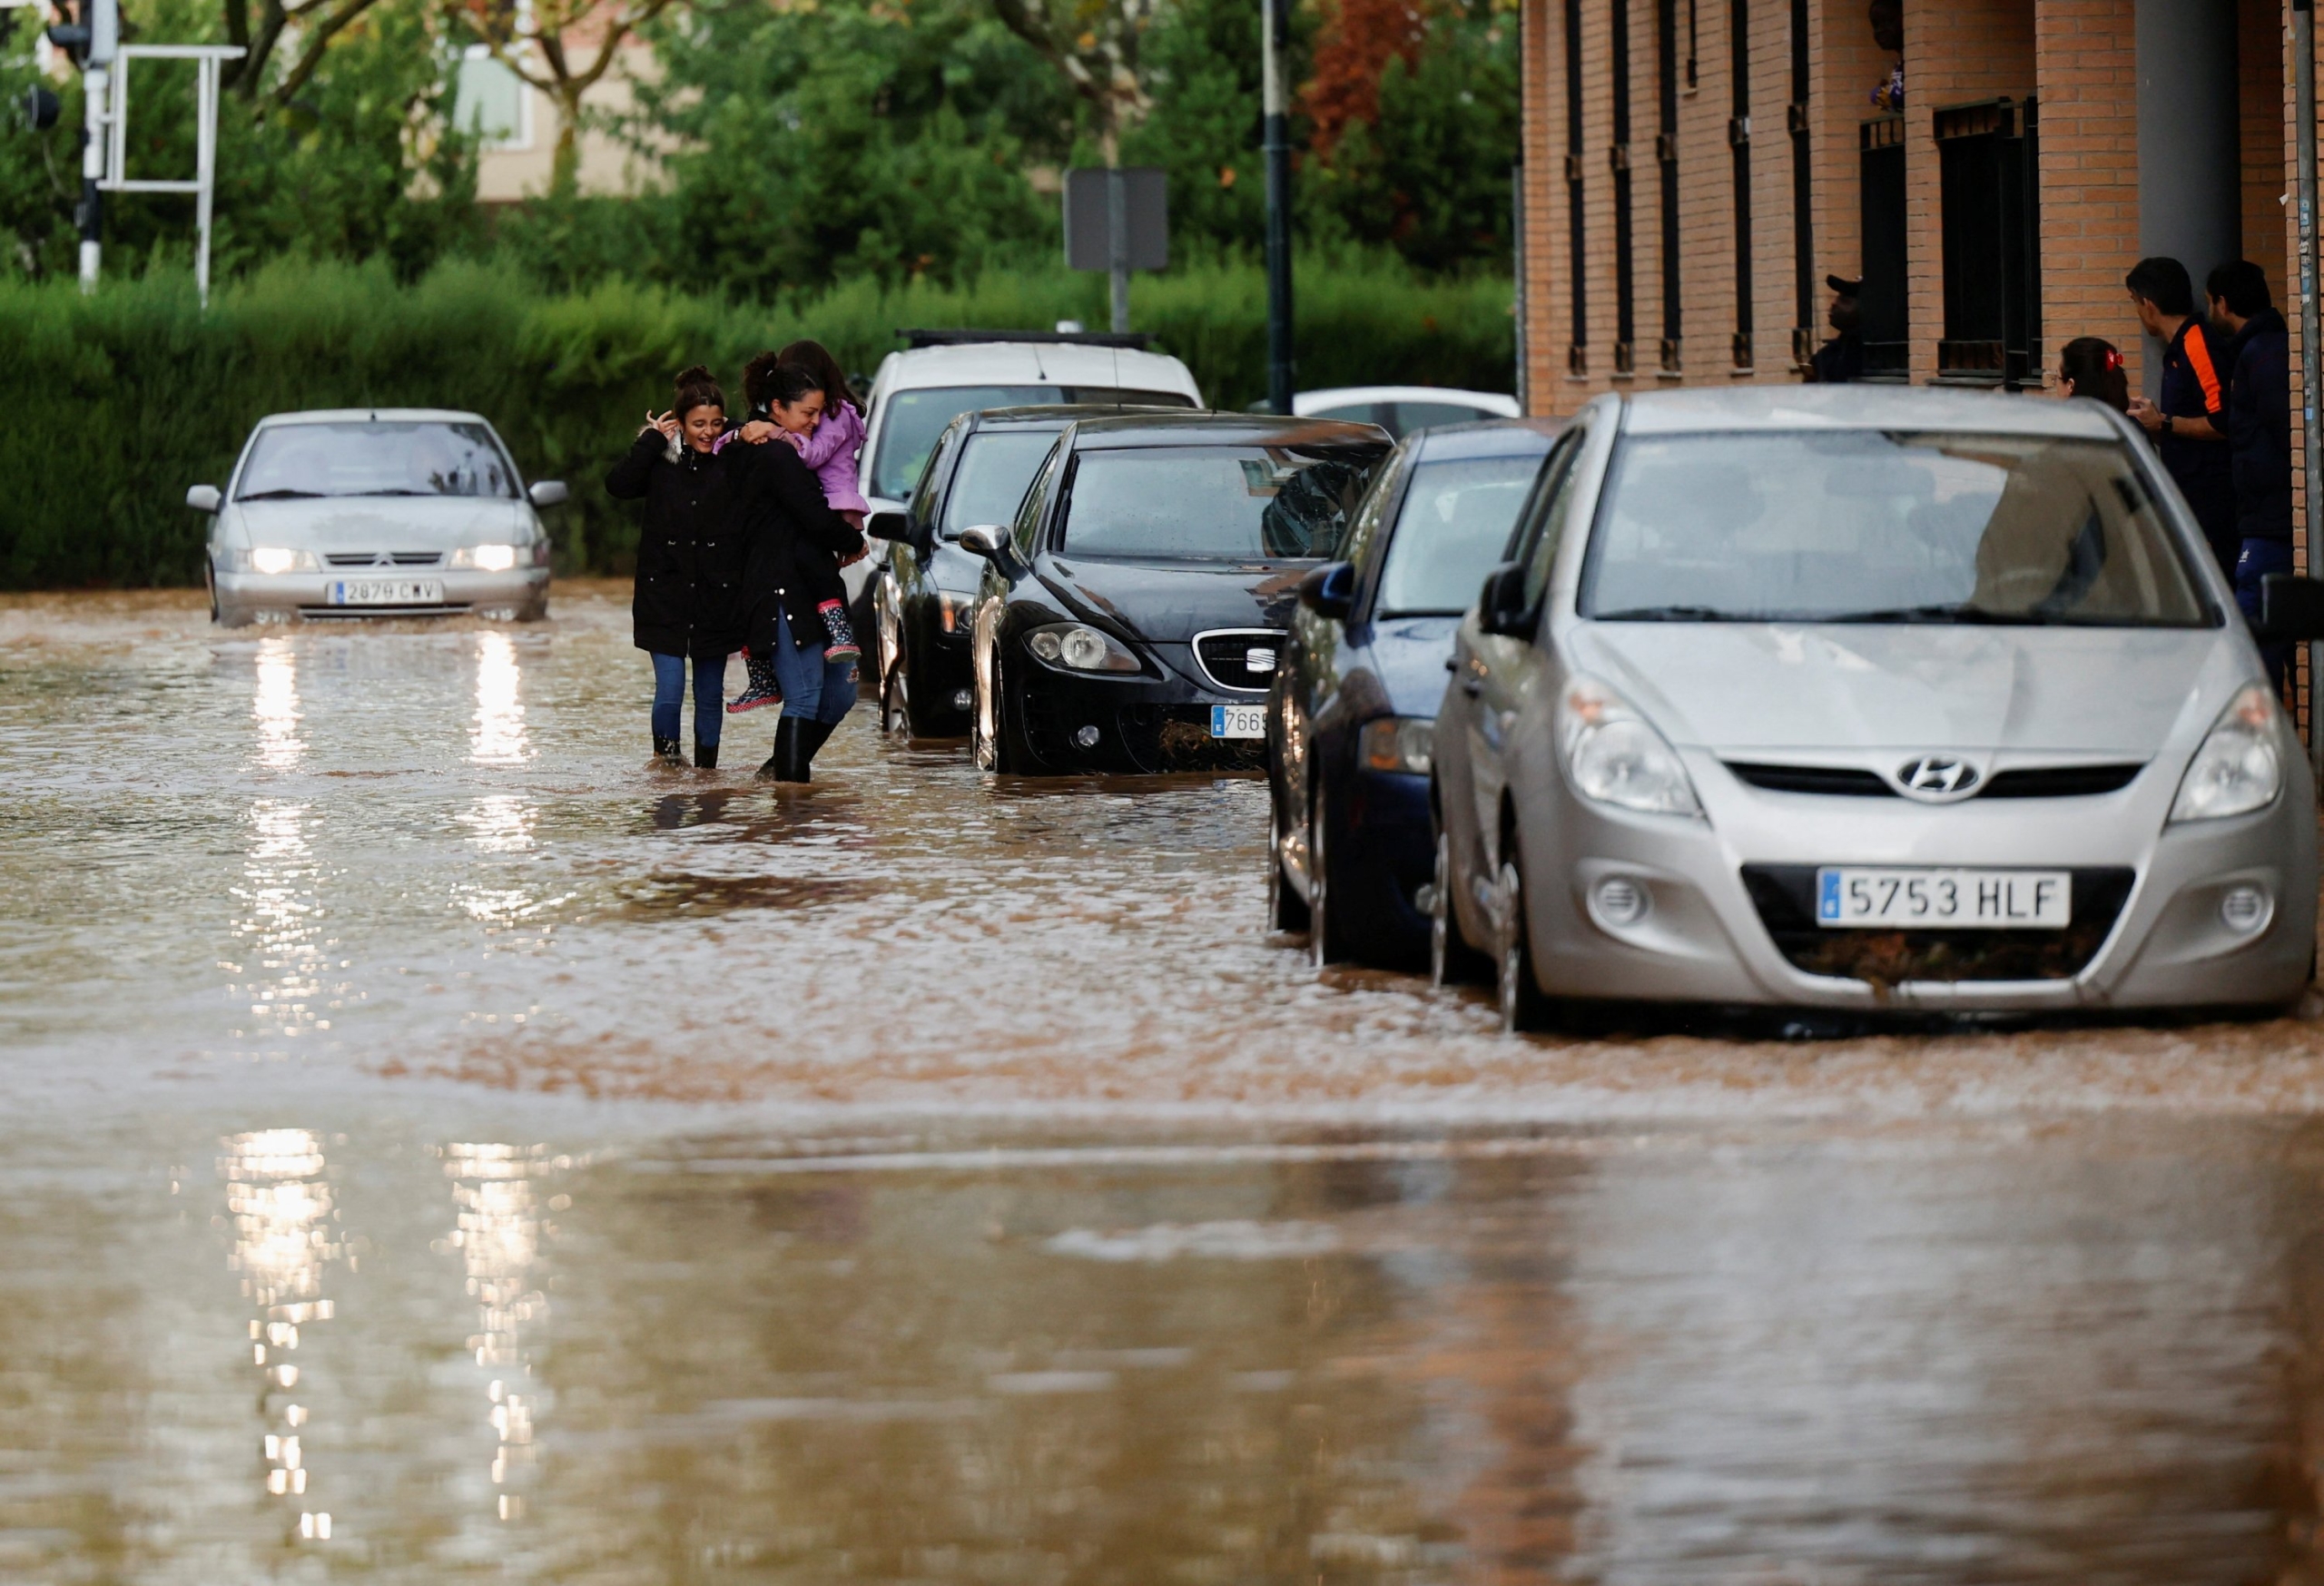 cars after floods hit Valencia, Spain